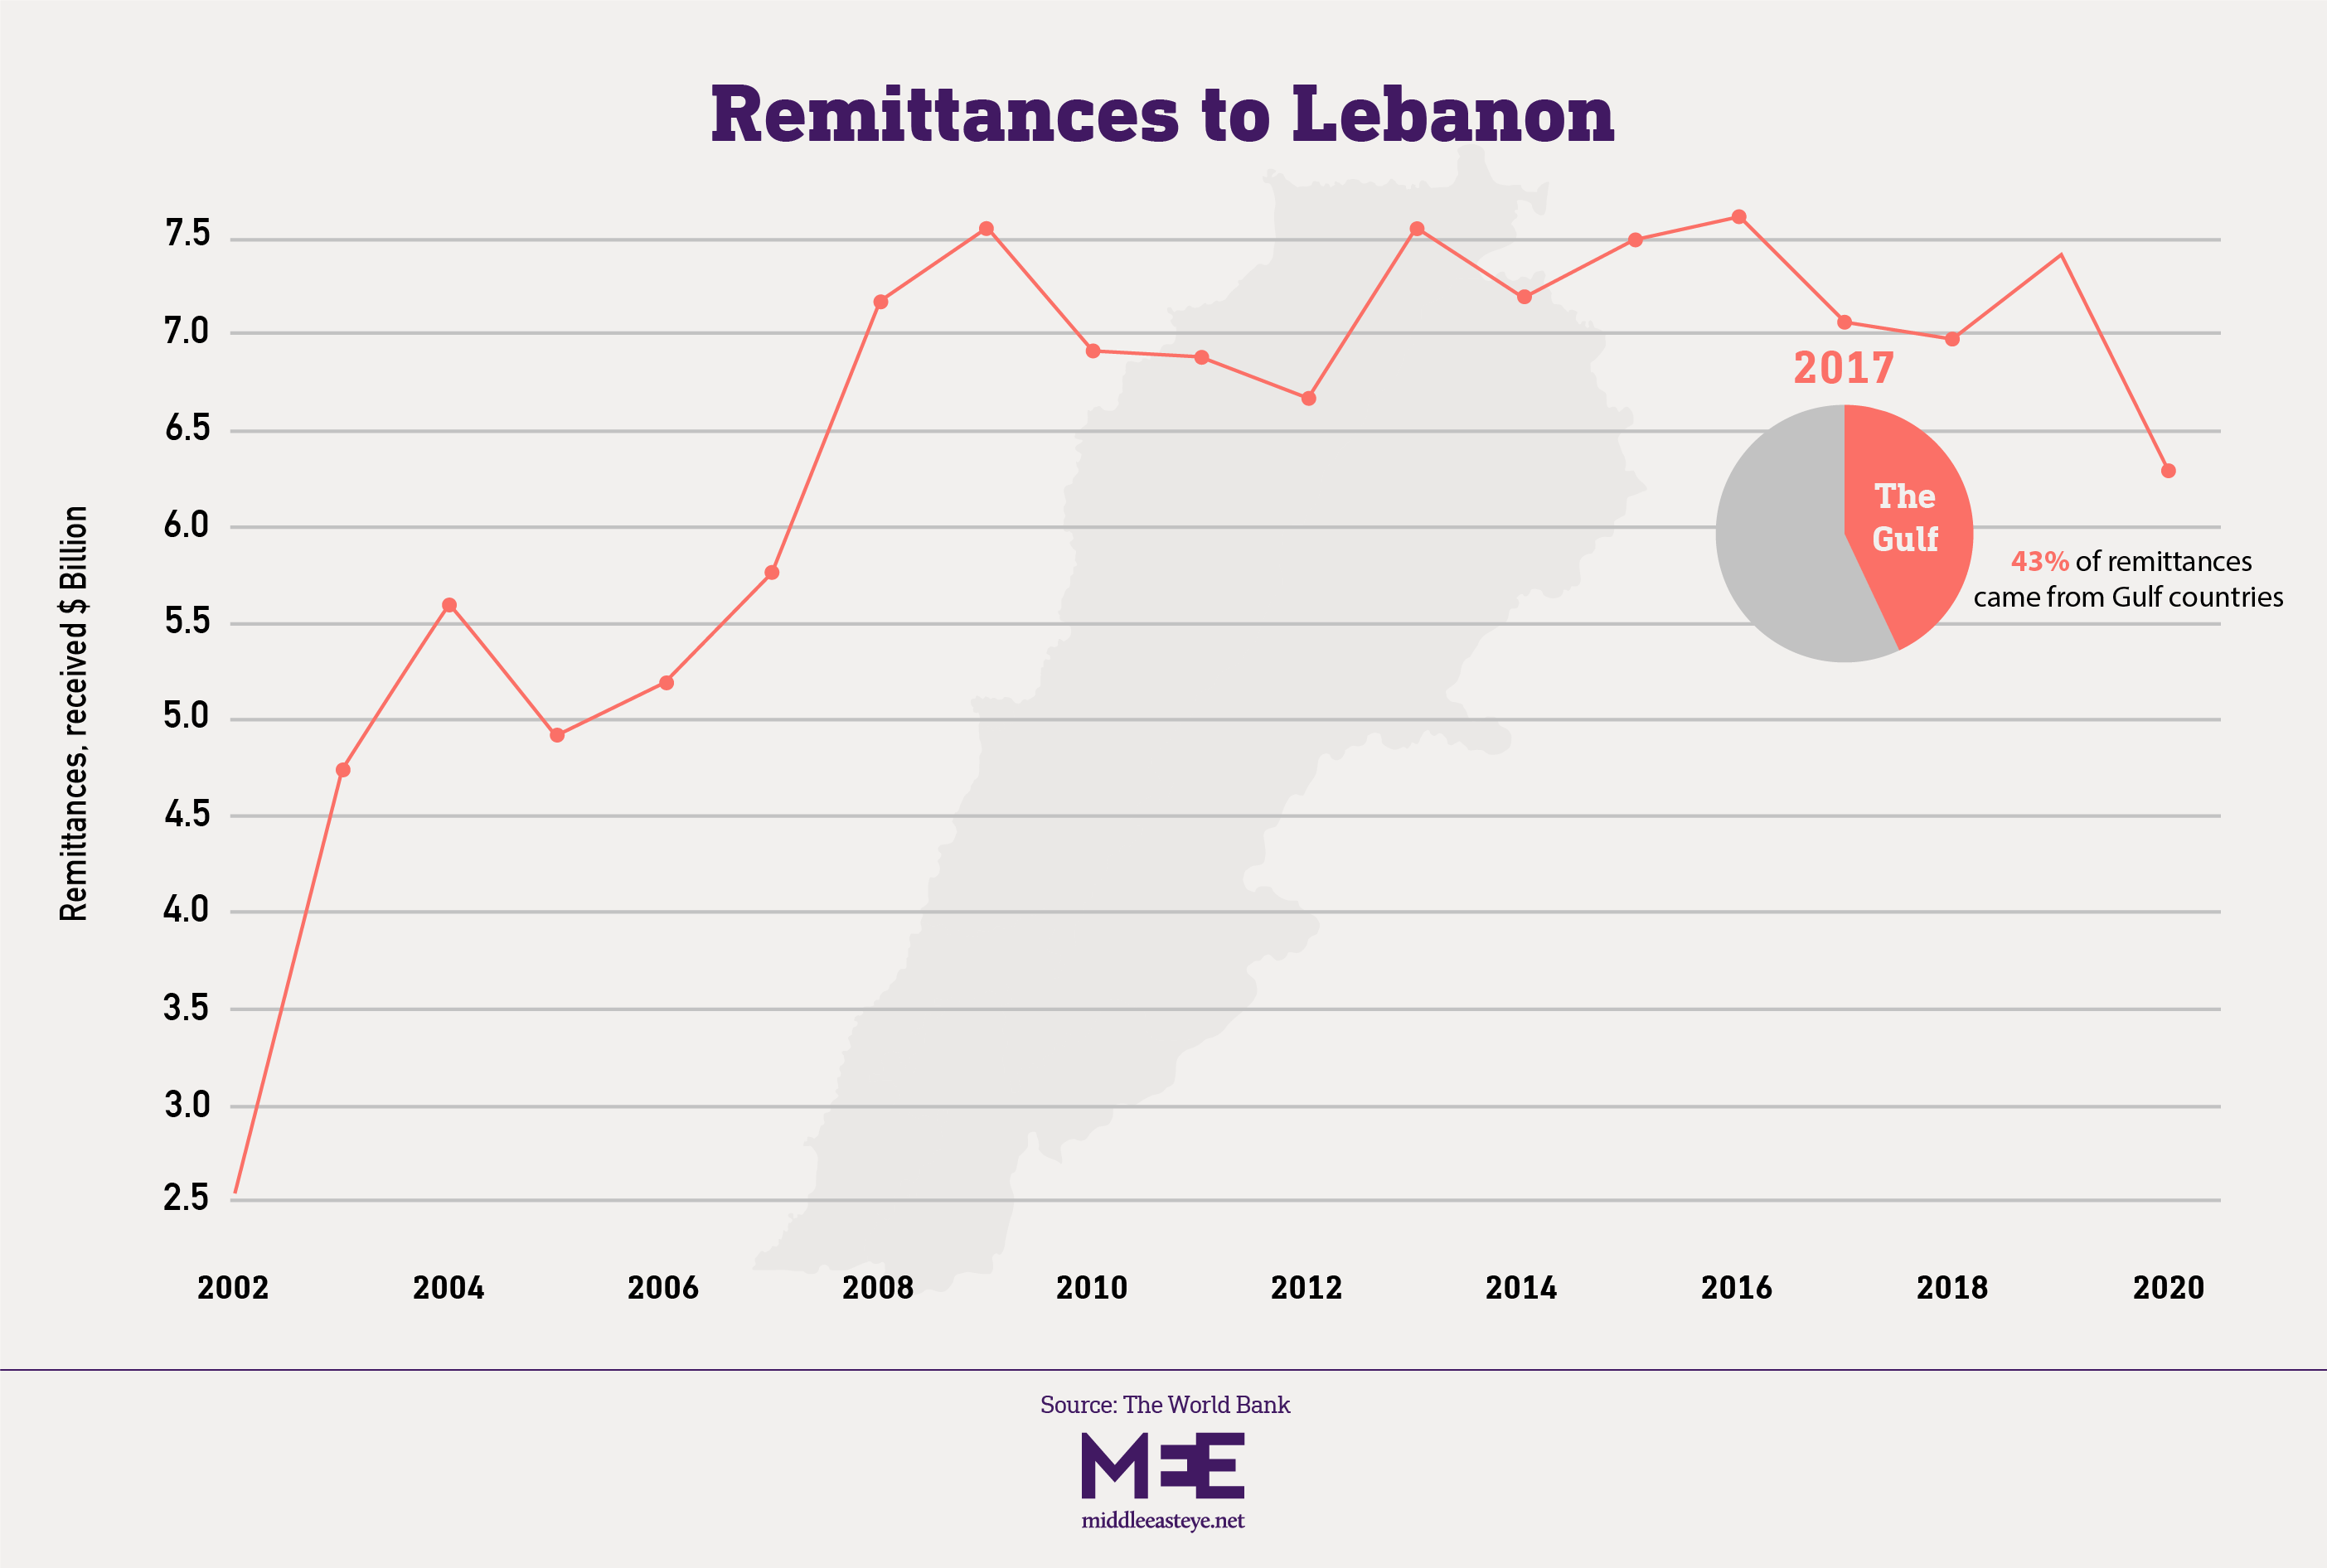 Graphic on remittances to Lebanon, based on World Bank data